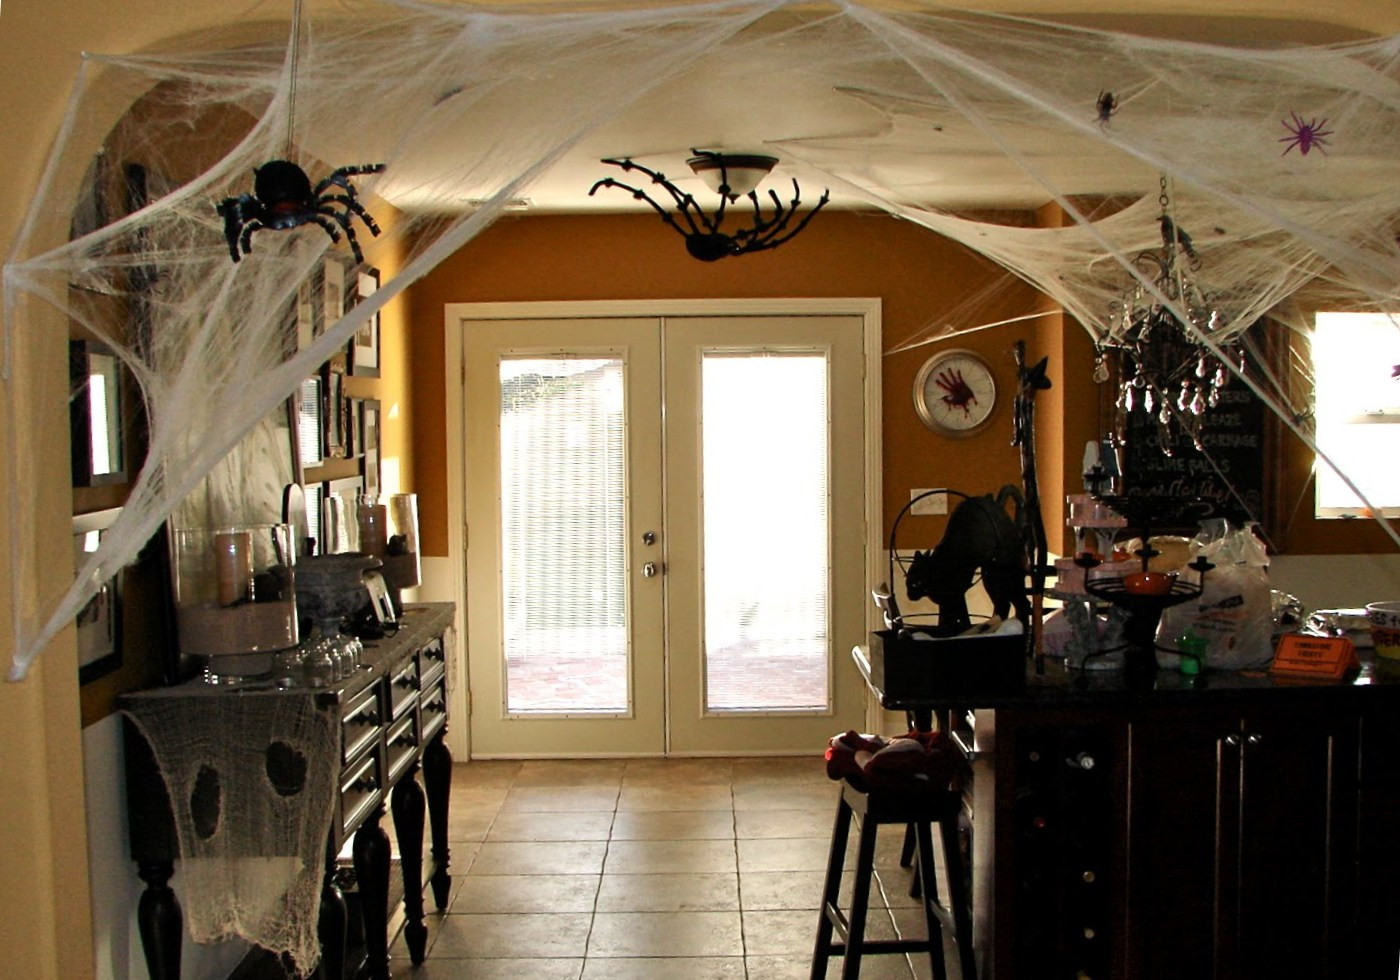 Indoor Halloween Party Decoration Ideas
 plete List of Halloween Decorations Ideas In Your Home